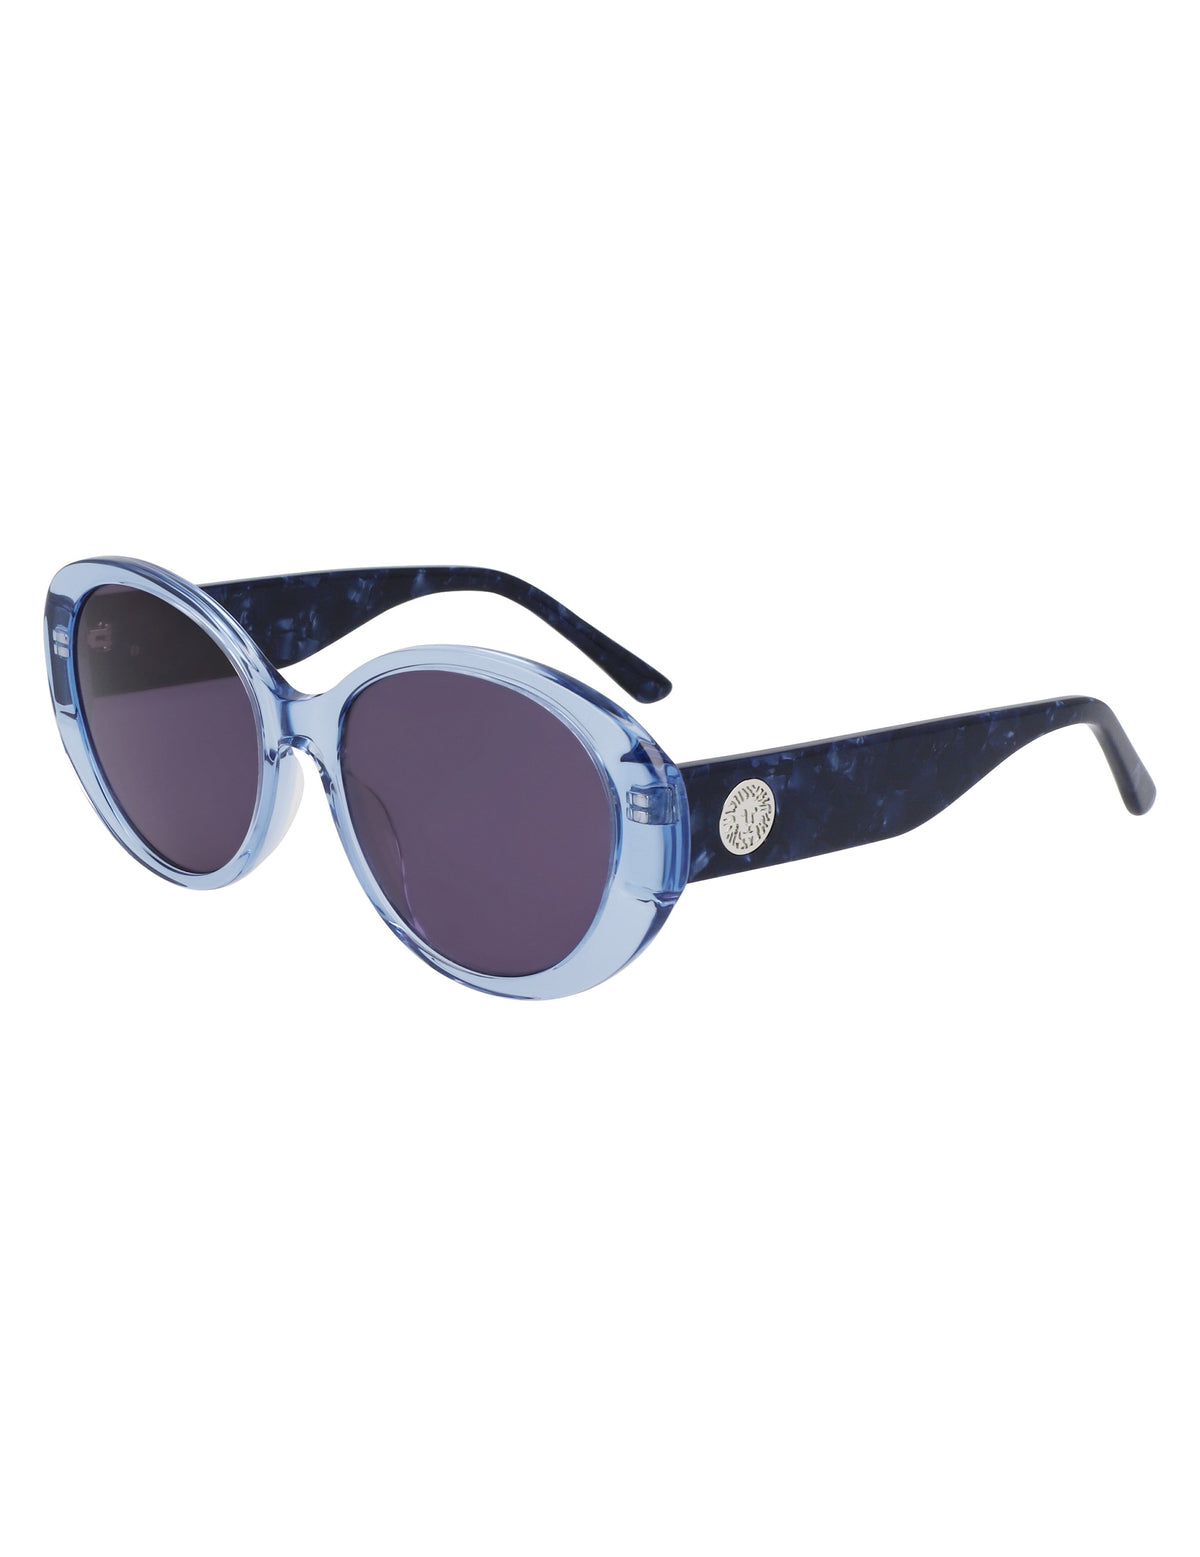 Anne Klein  Glamorous Oval Sunglasses